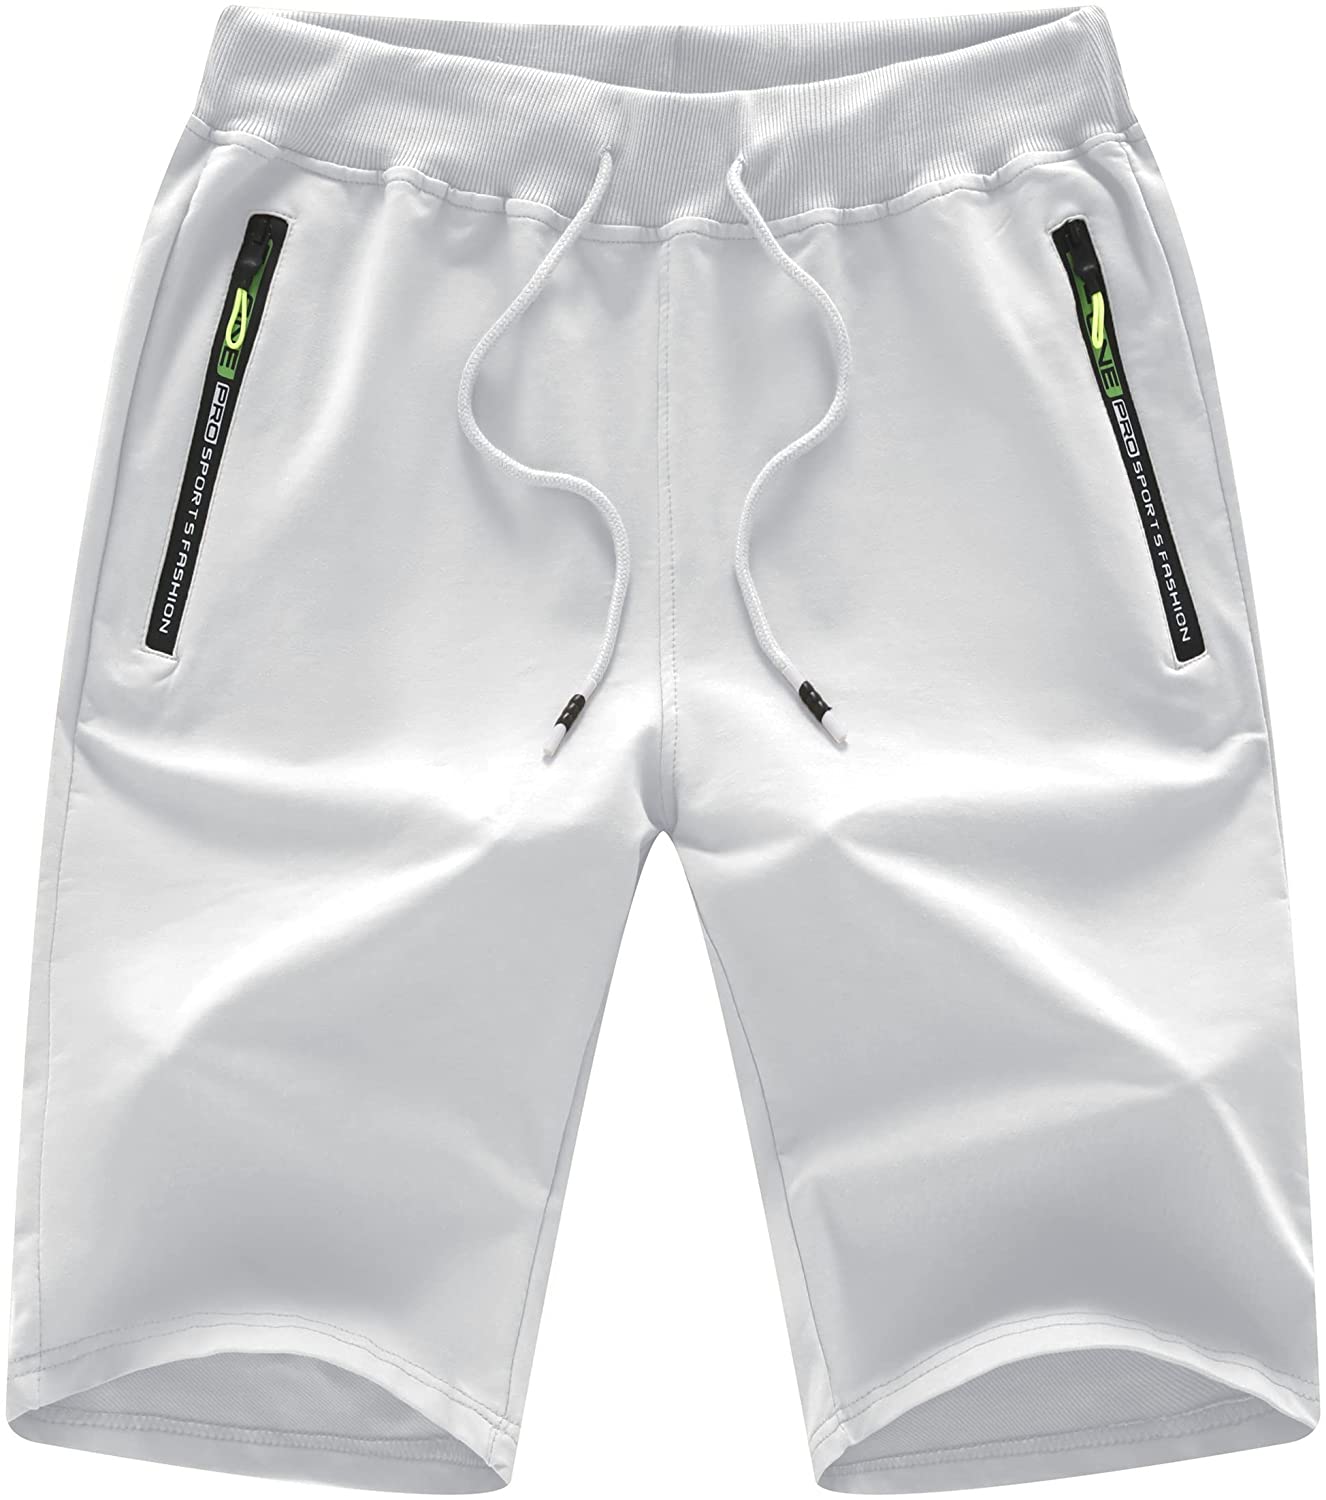 Chrisuno Men's Shorts Elastic Waist Athletic Sweat Shorts with Zipper Pockets 